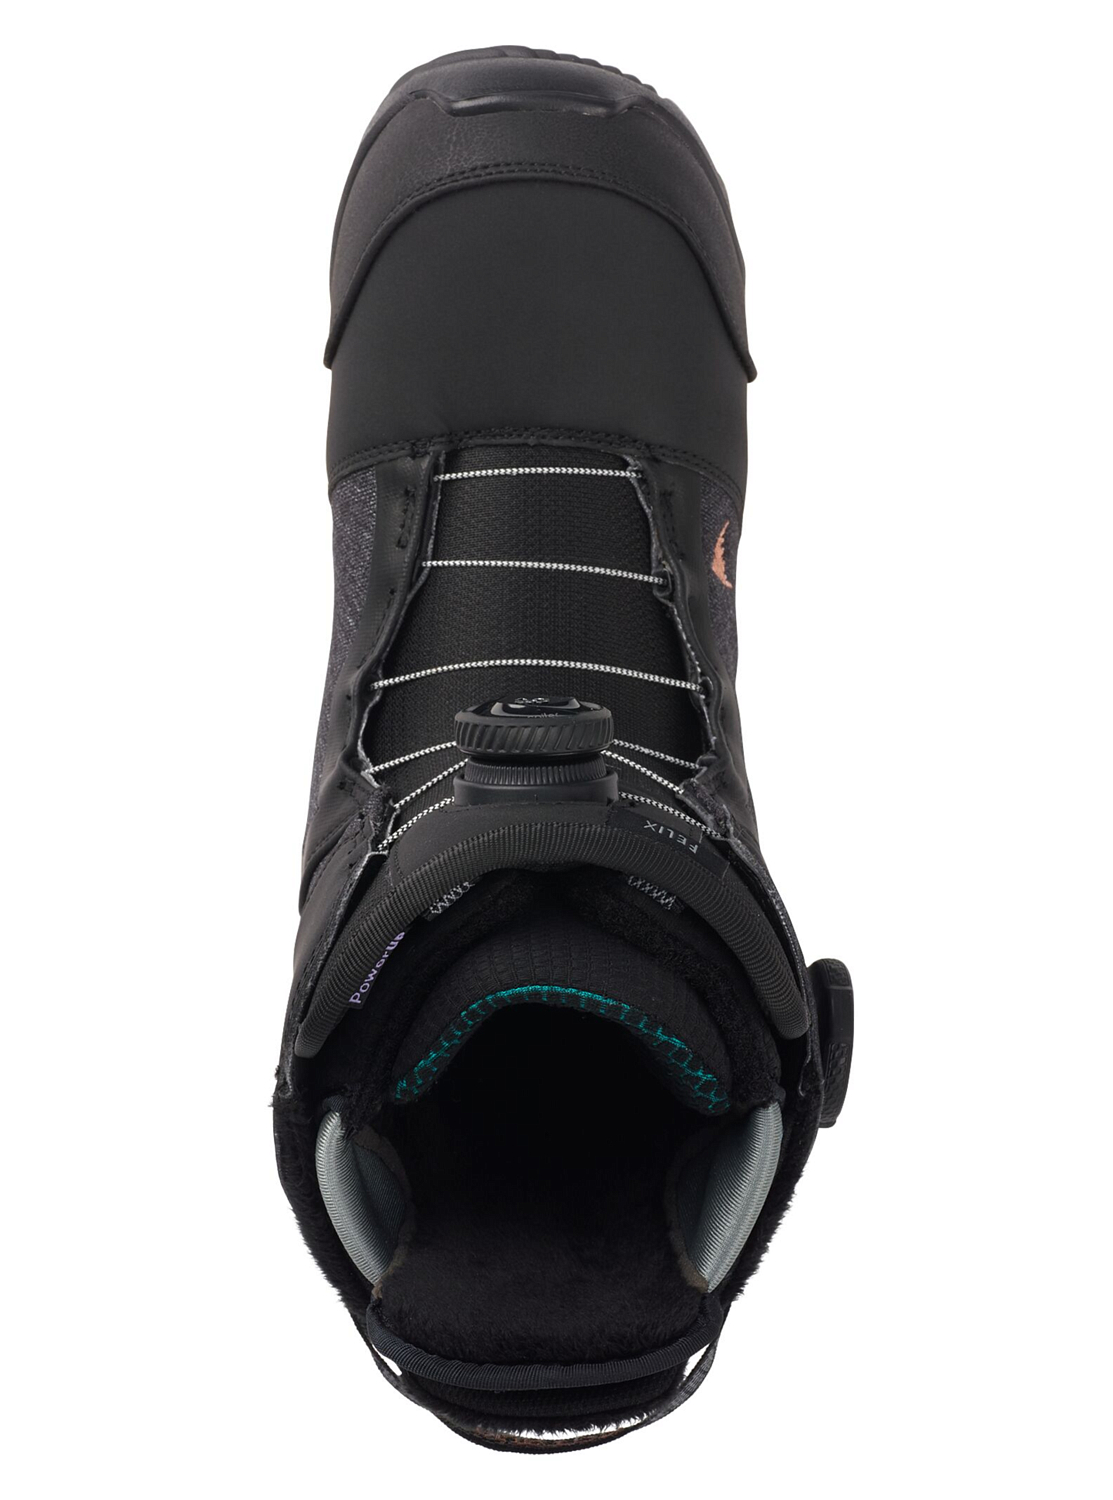 Ботинки для сноуборда BURTON 2020-21 Felix Boa Black